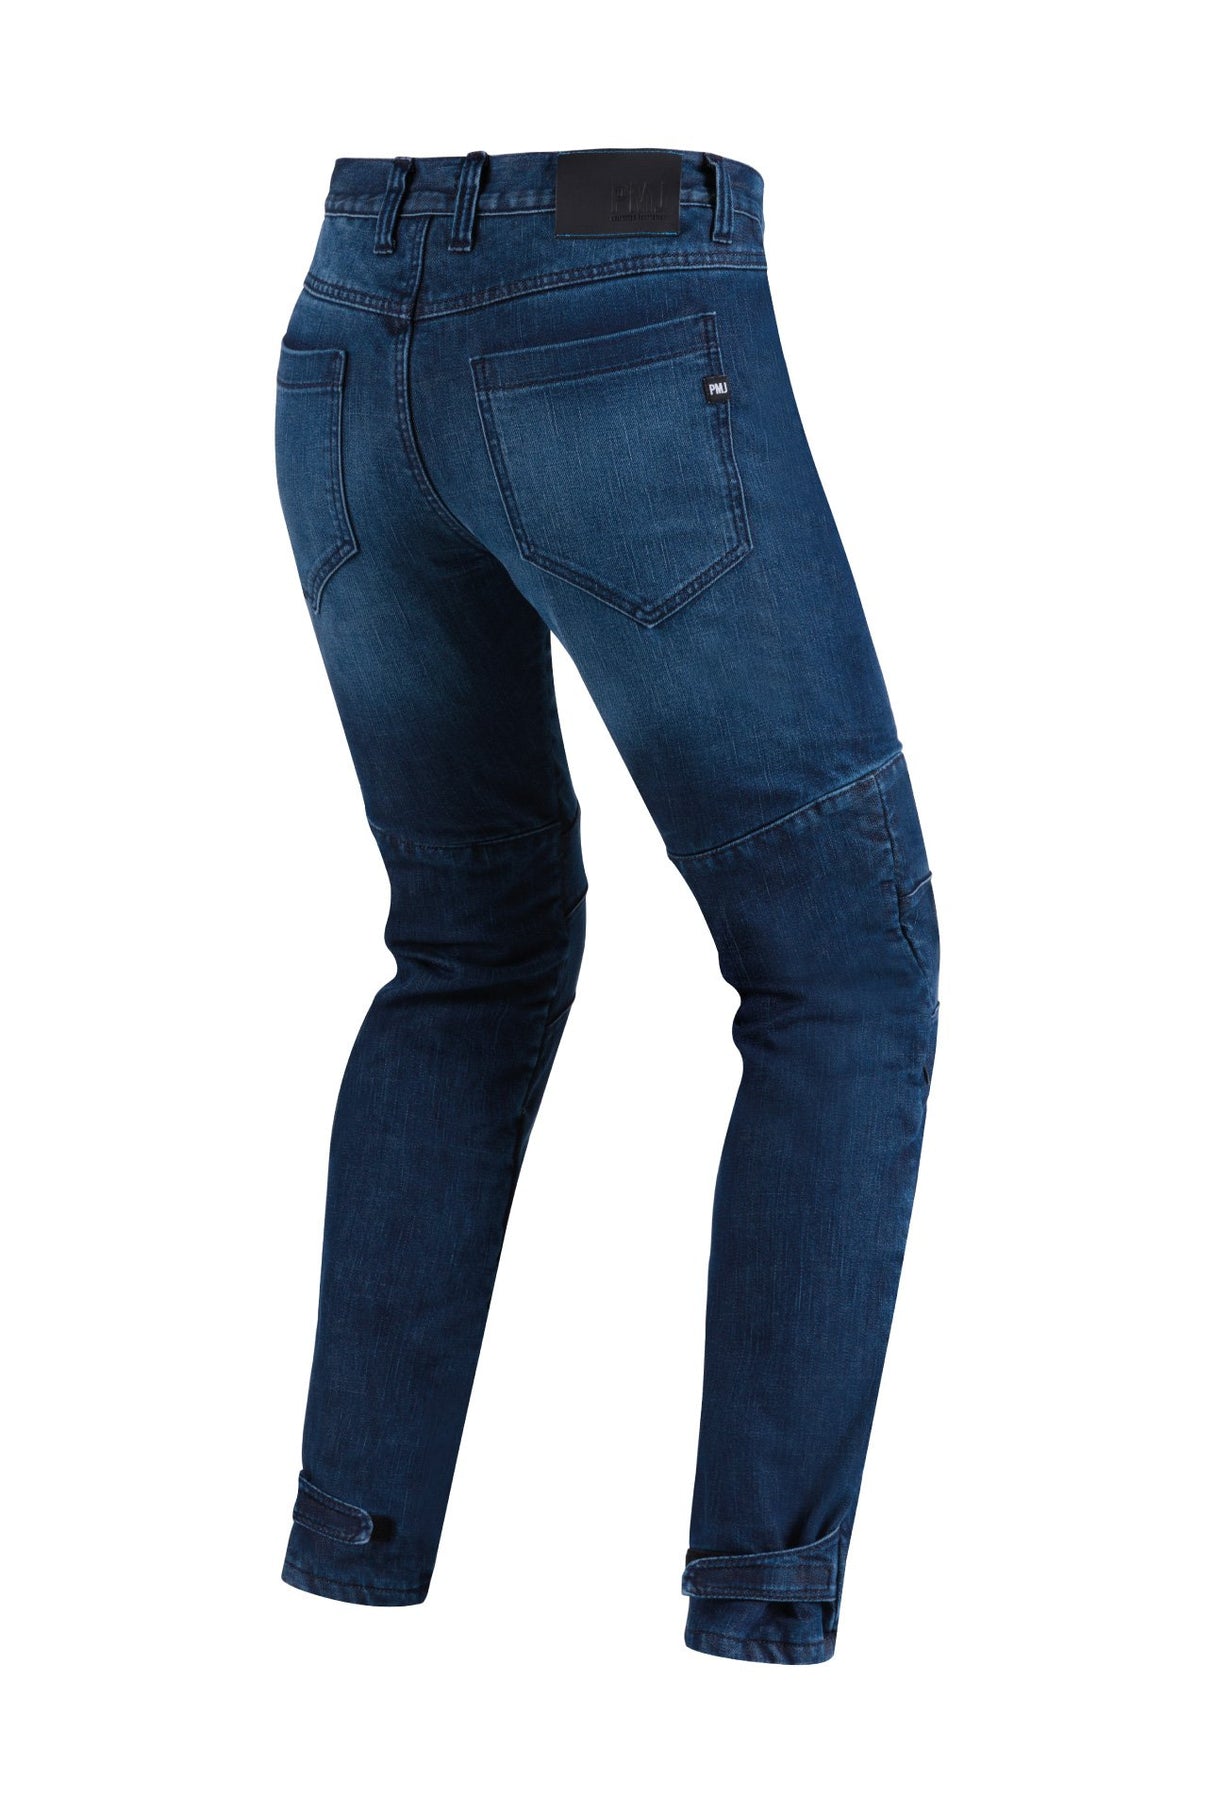 PMJ Titanium Jeans - Mid Blue Unico